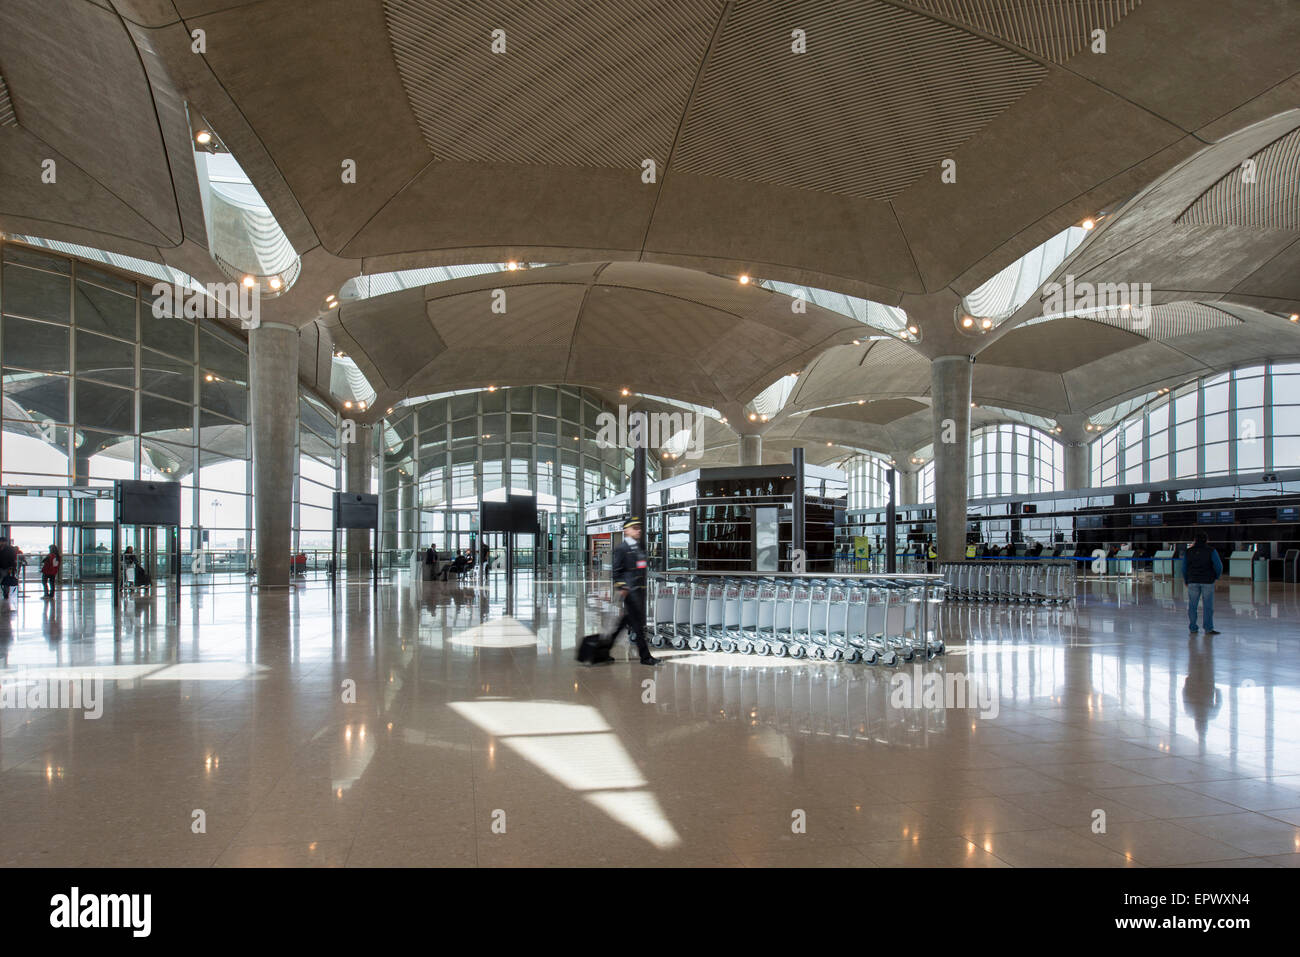 Queen Alia International Airport, Amman, Jordan Stock Photo - Alamy